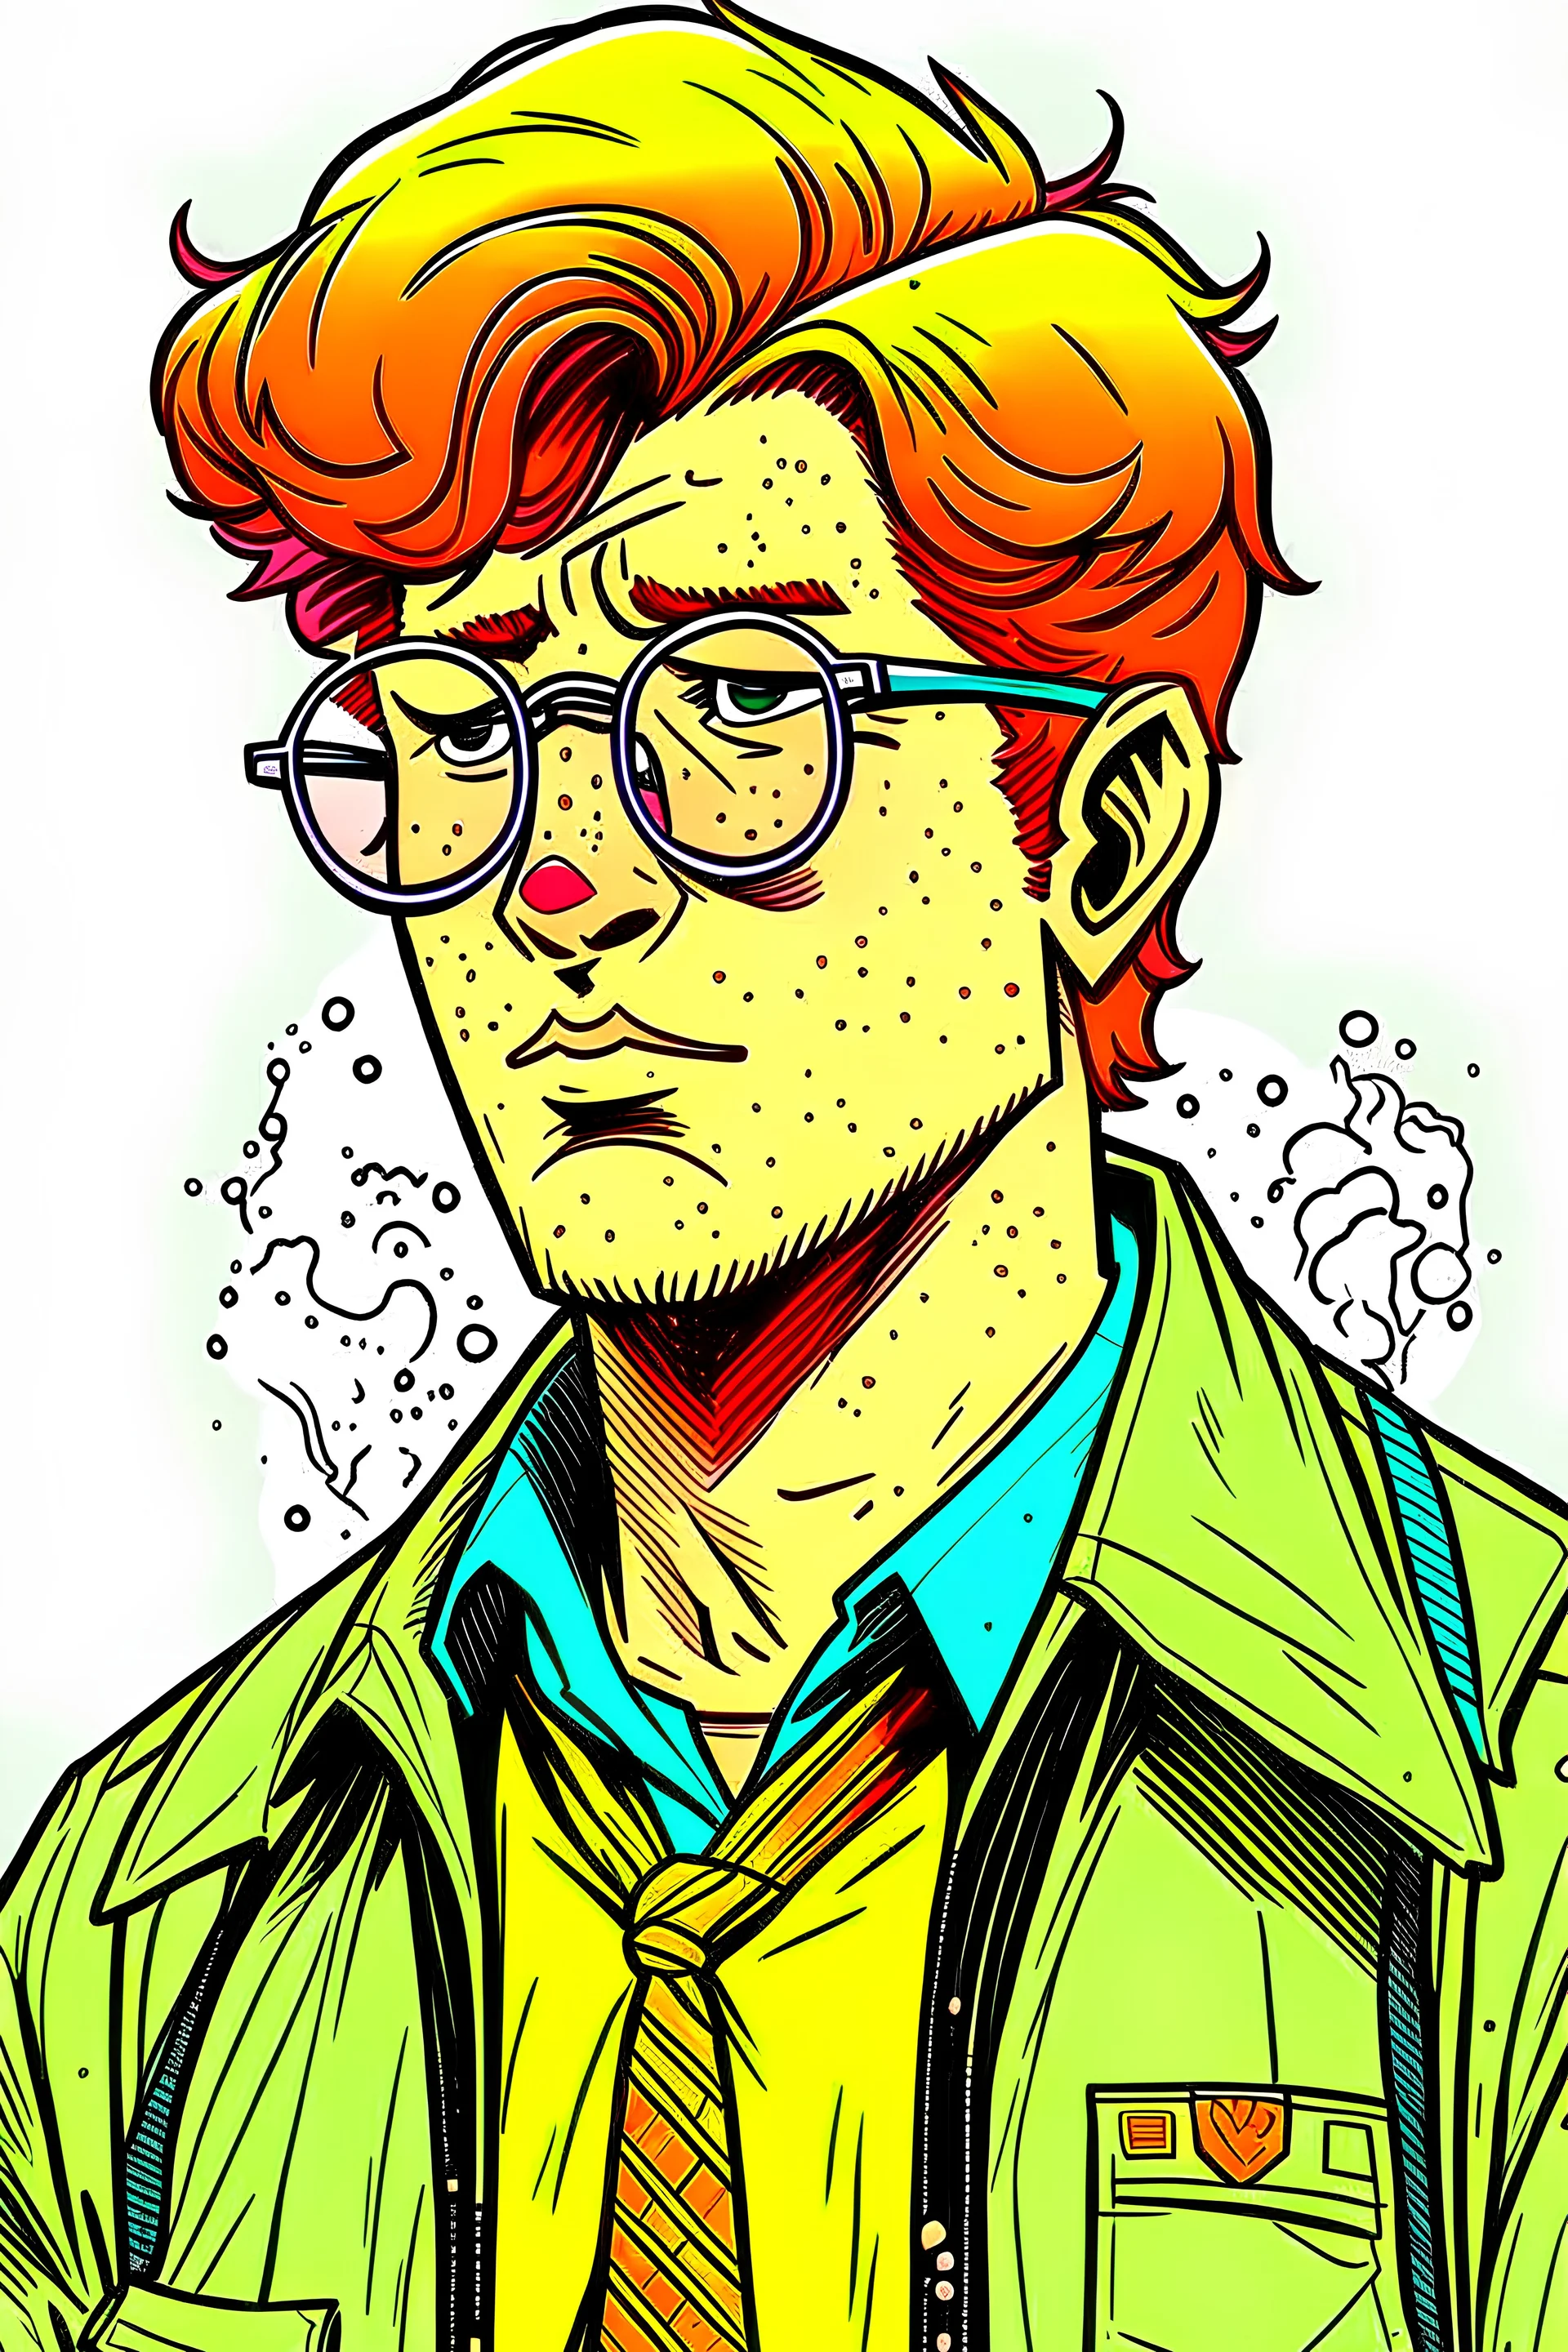 ginger plump teen nerd male by gabriel picolo, 80's